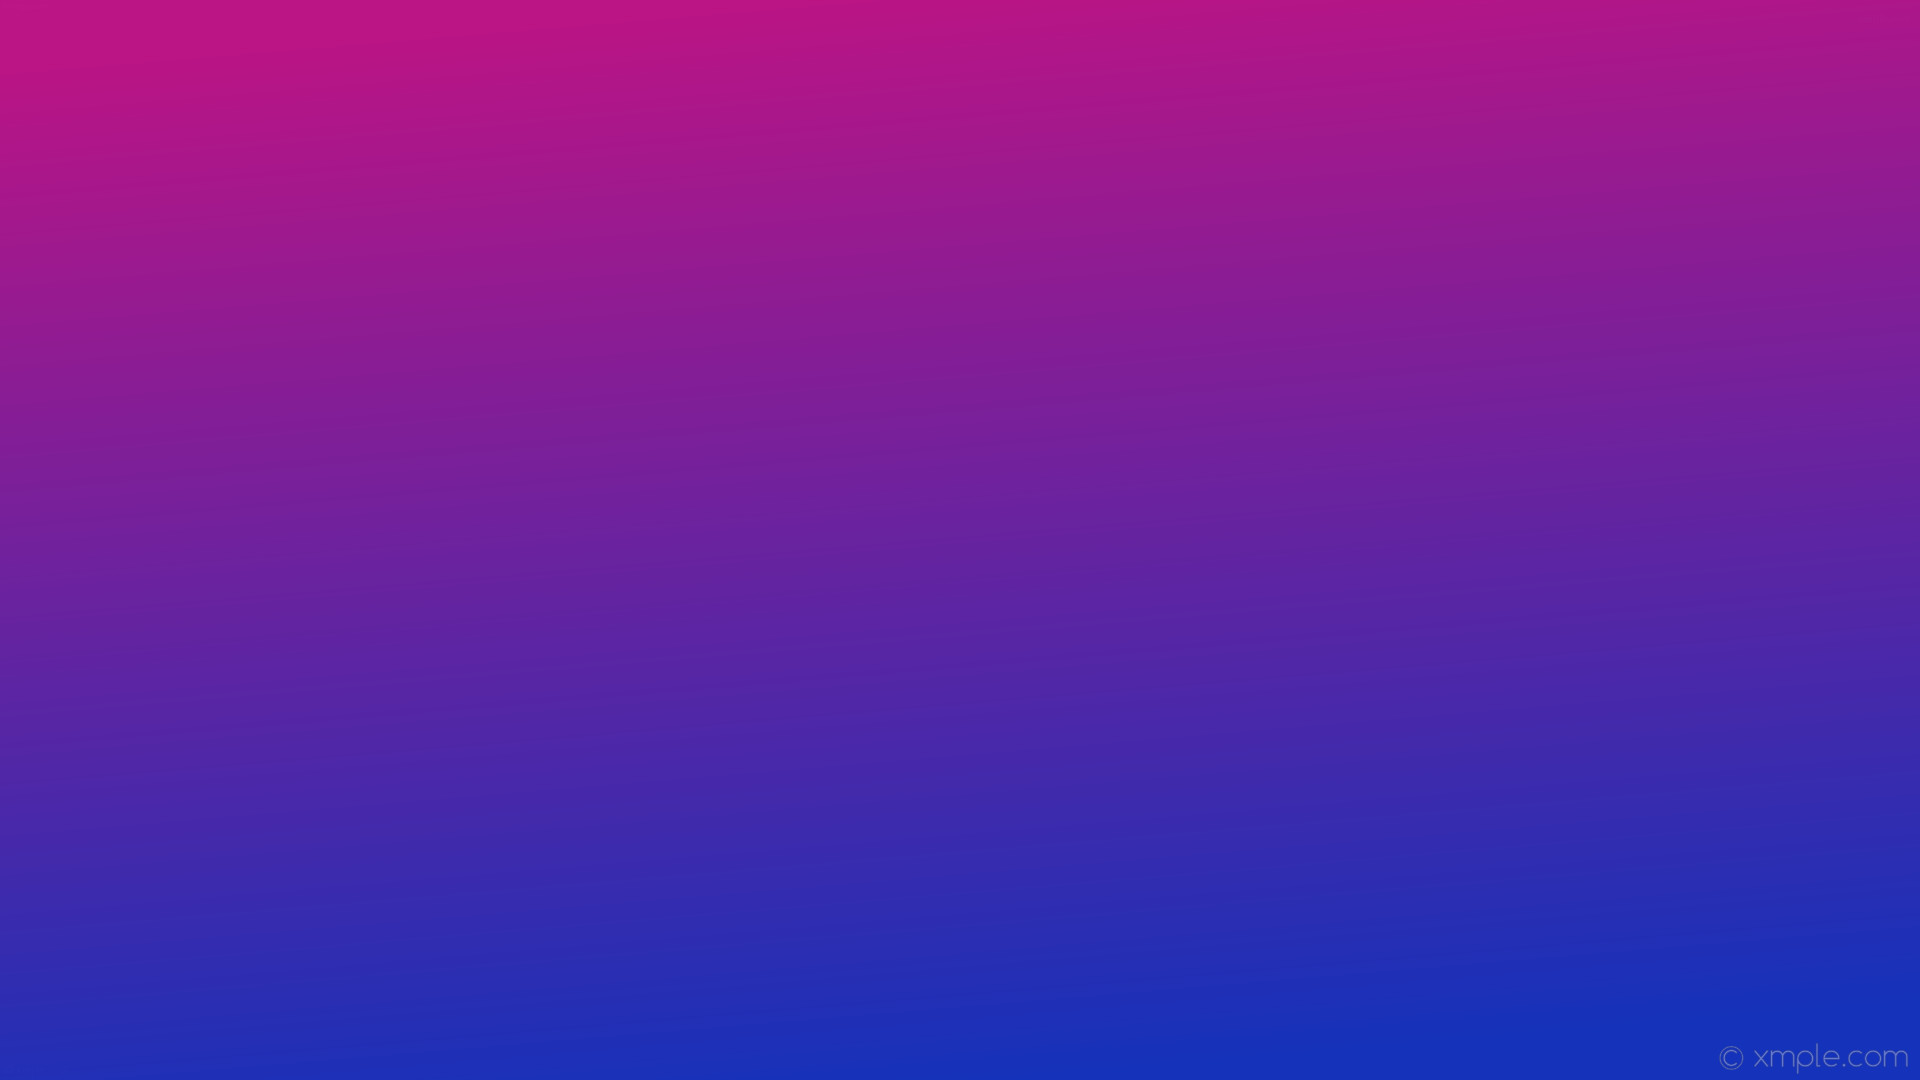 1920x1080 wallpaper linear pink gradient blue #1432ba #ba1485 285Â°